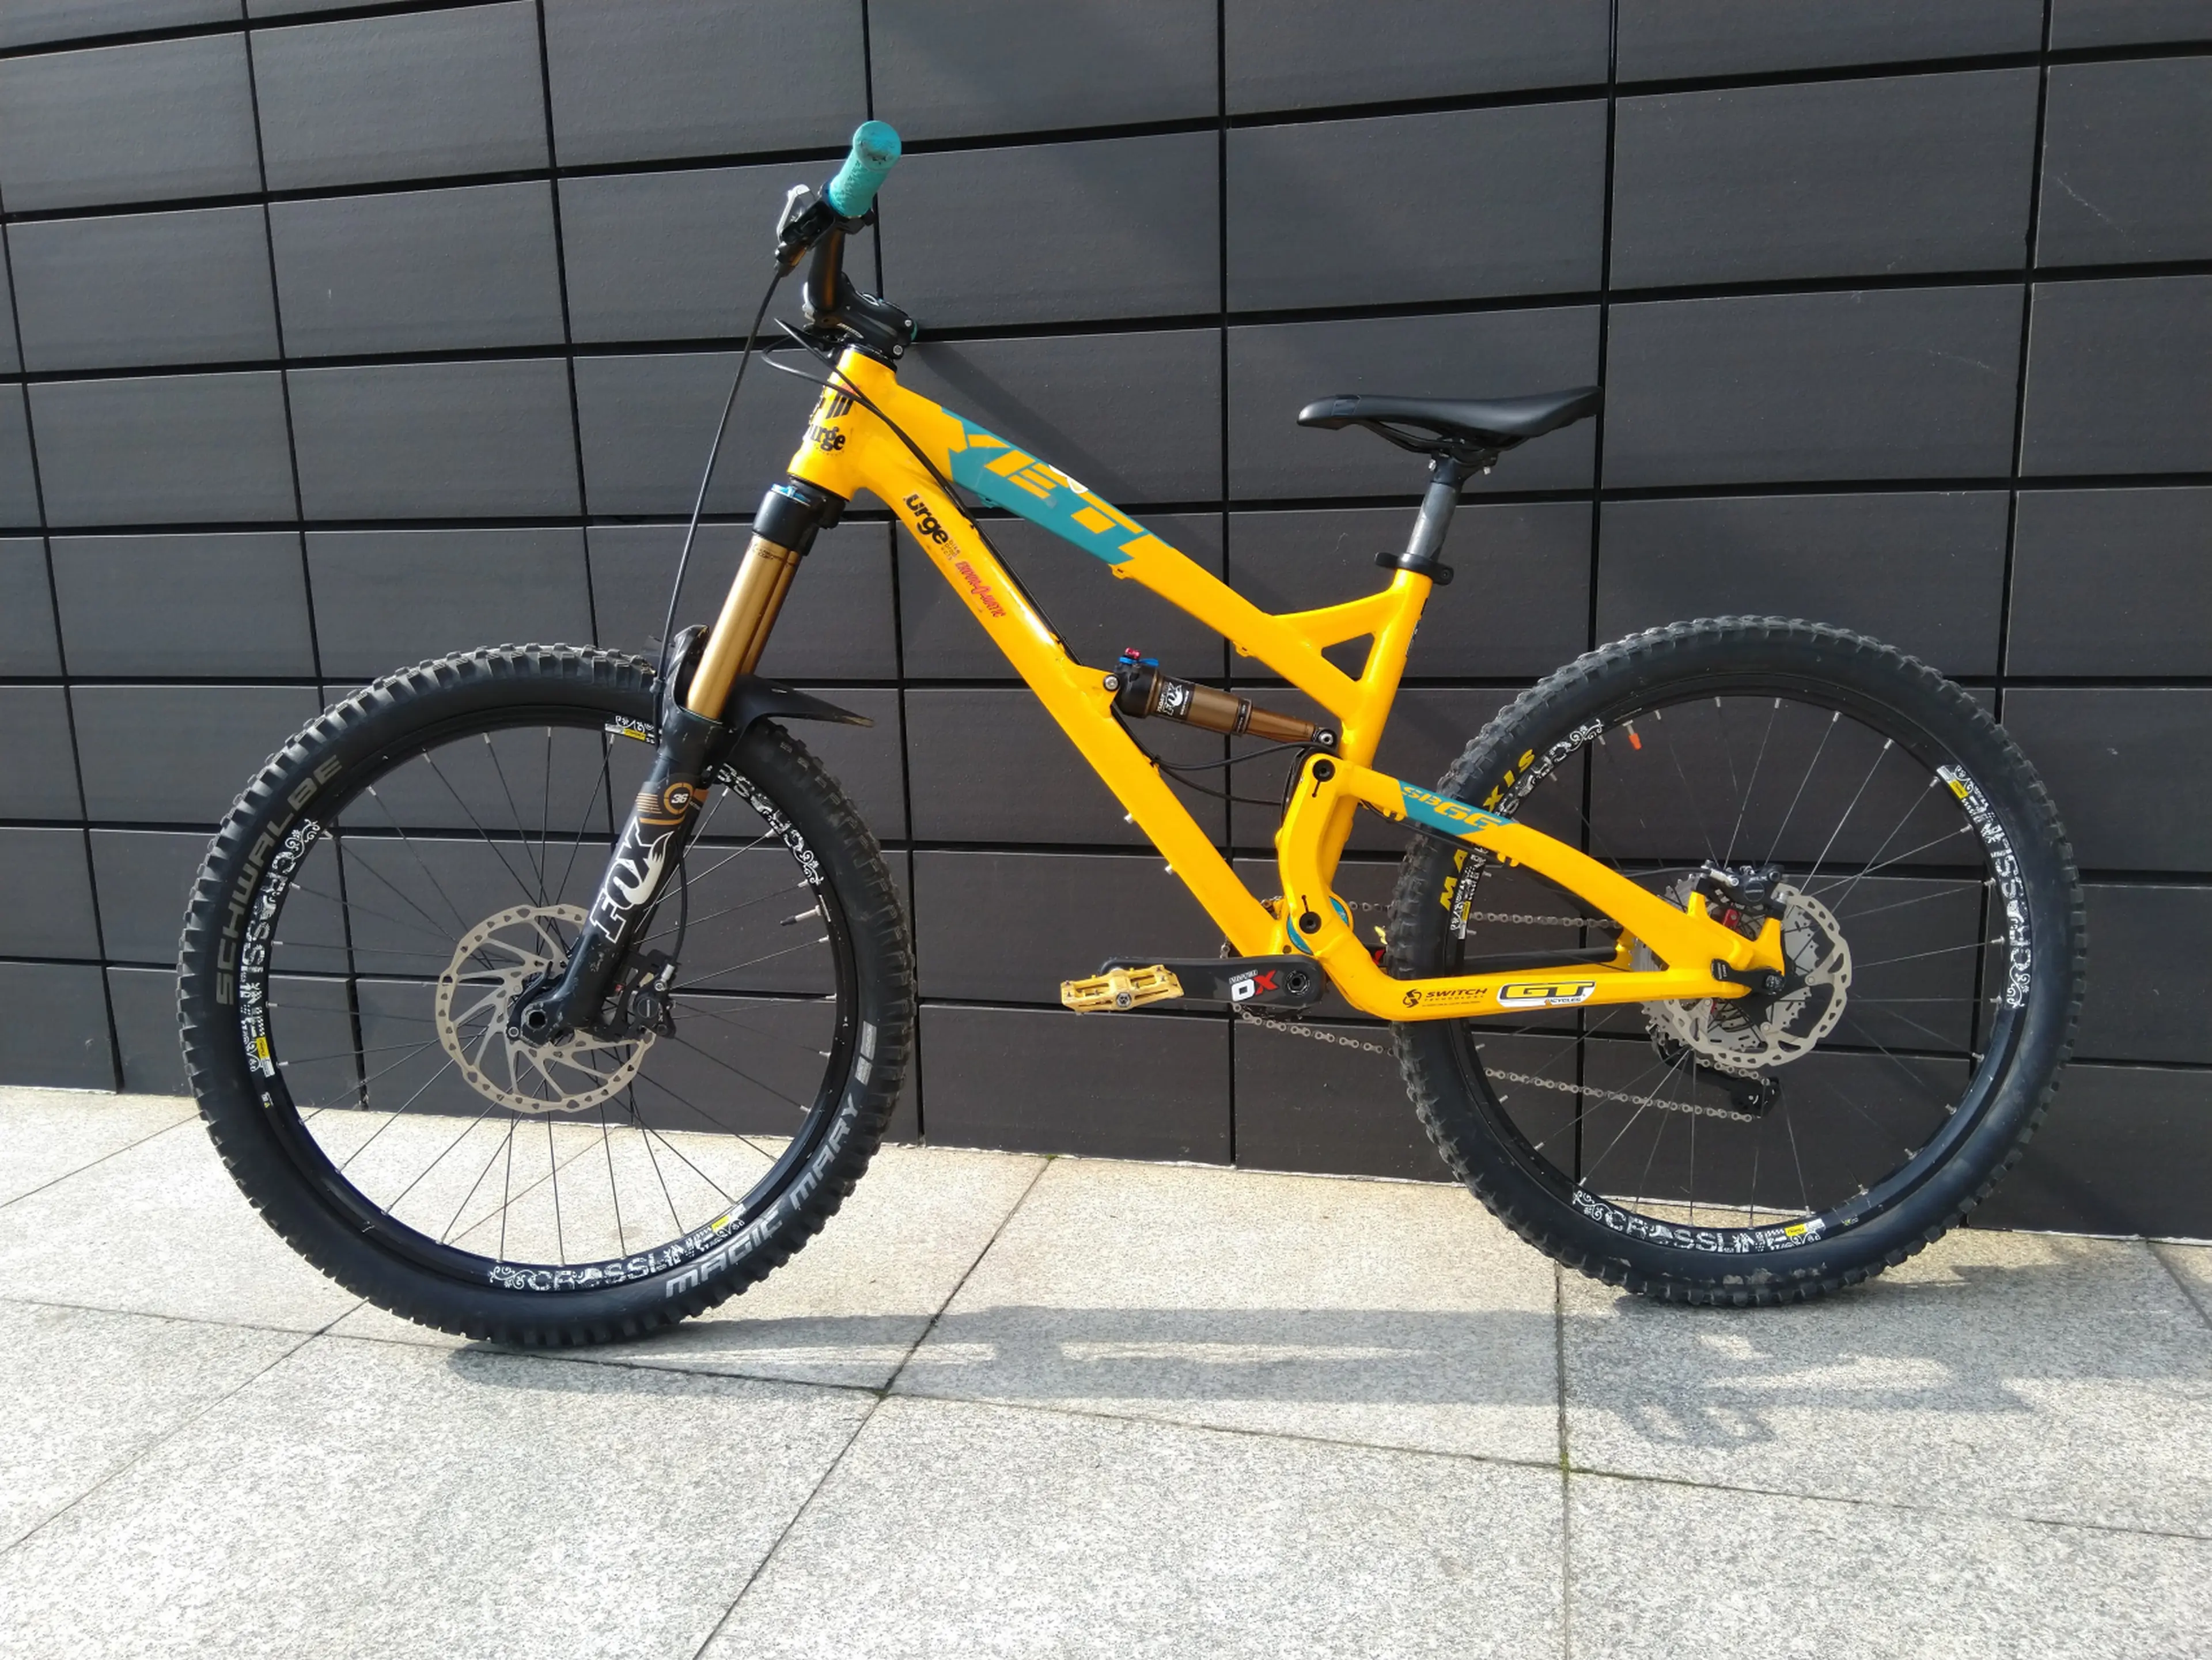 Image (Vândută) Bicicletă Yeti SB66, mărime S, roți 26", an 2014